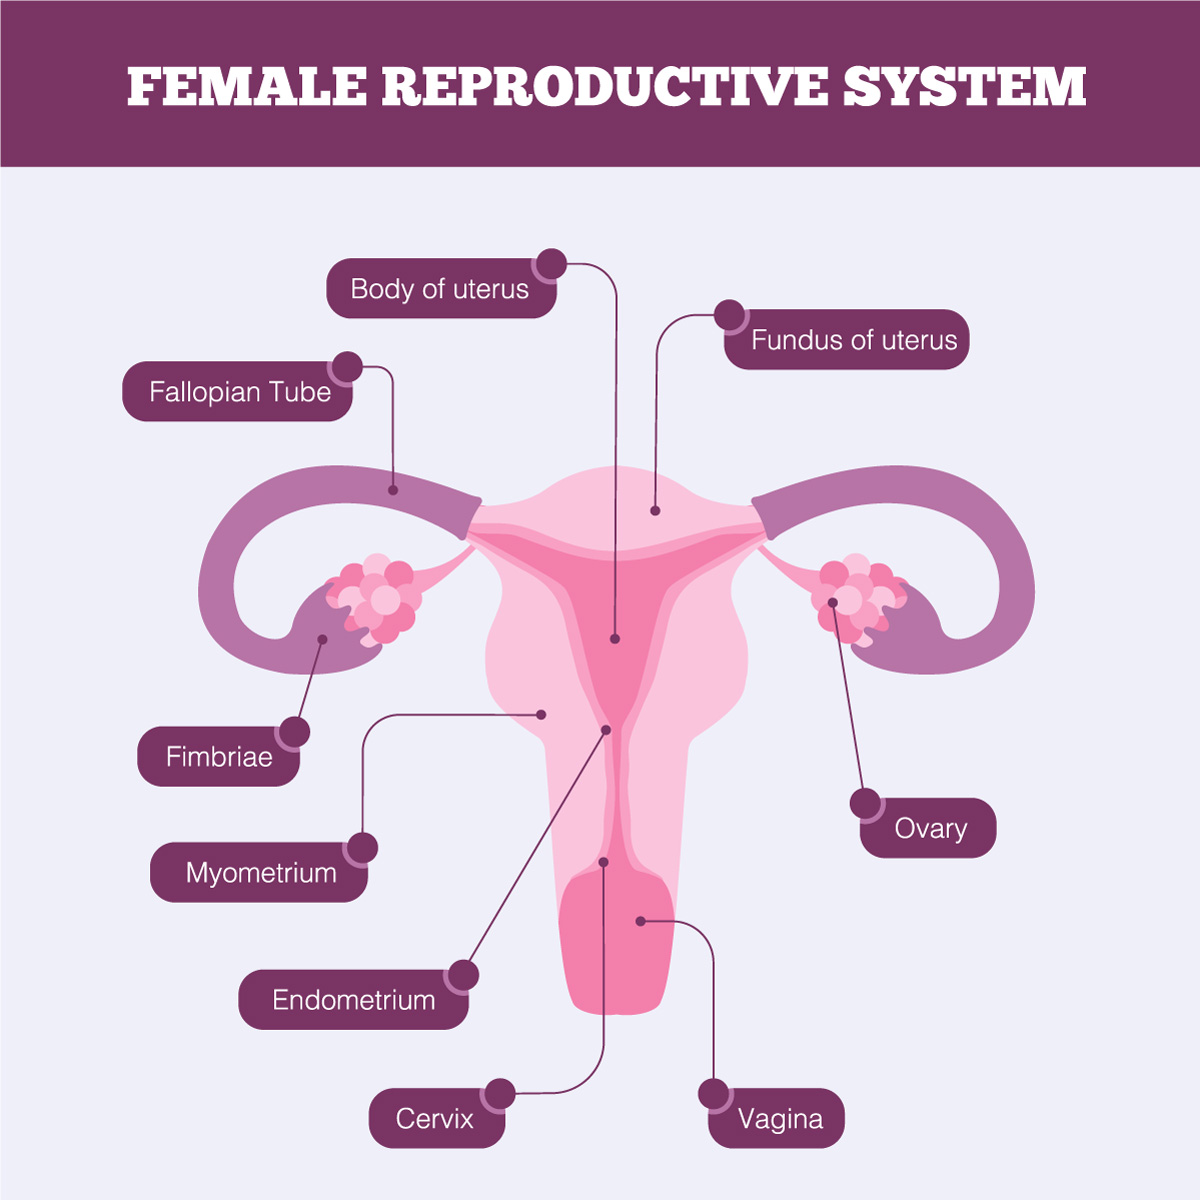 endo biopsy uterus